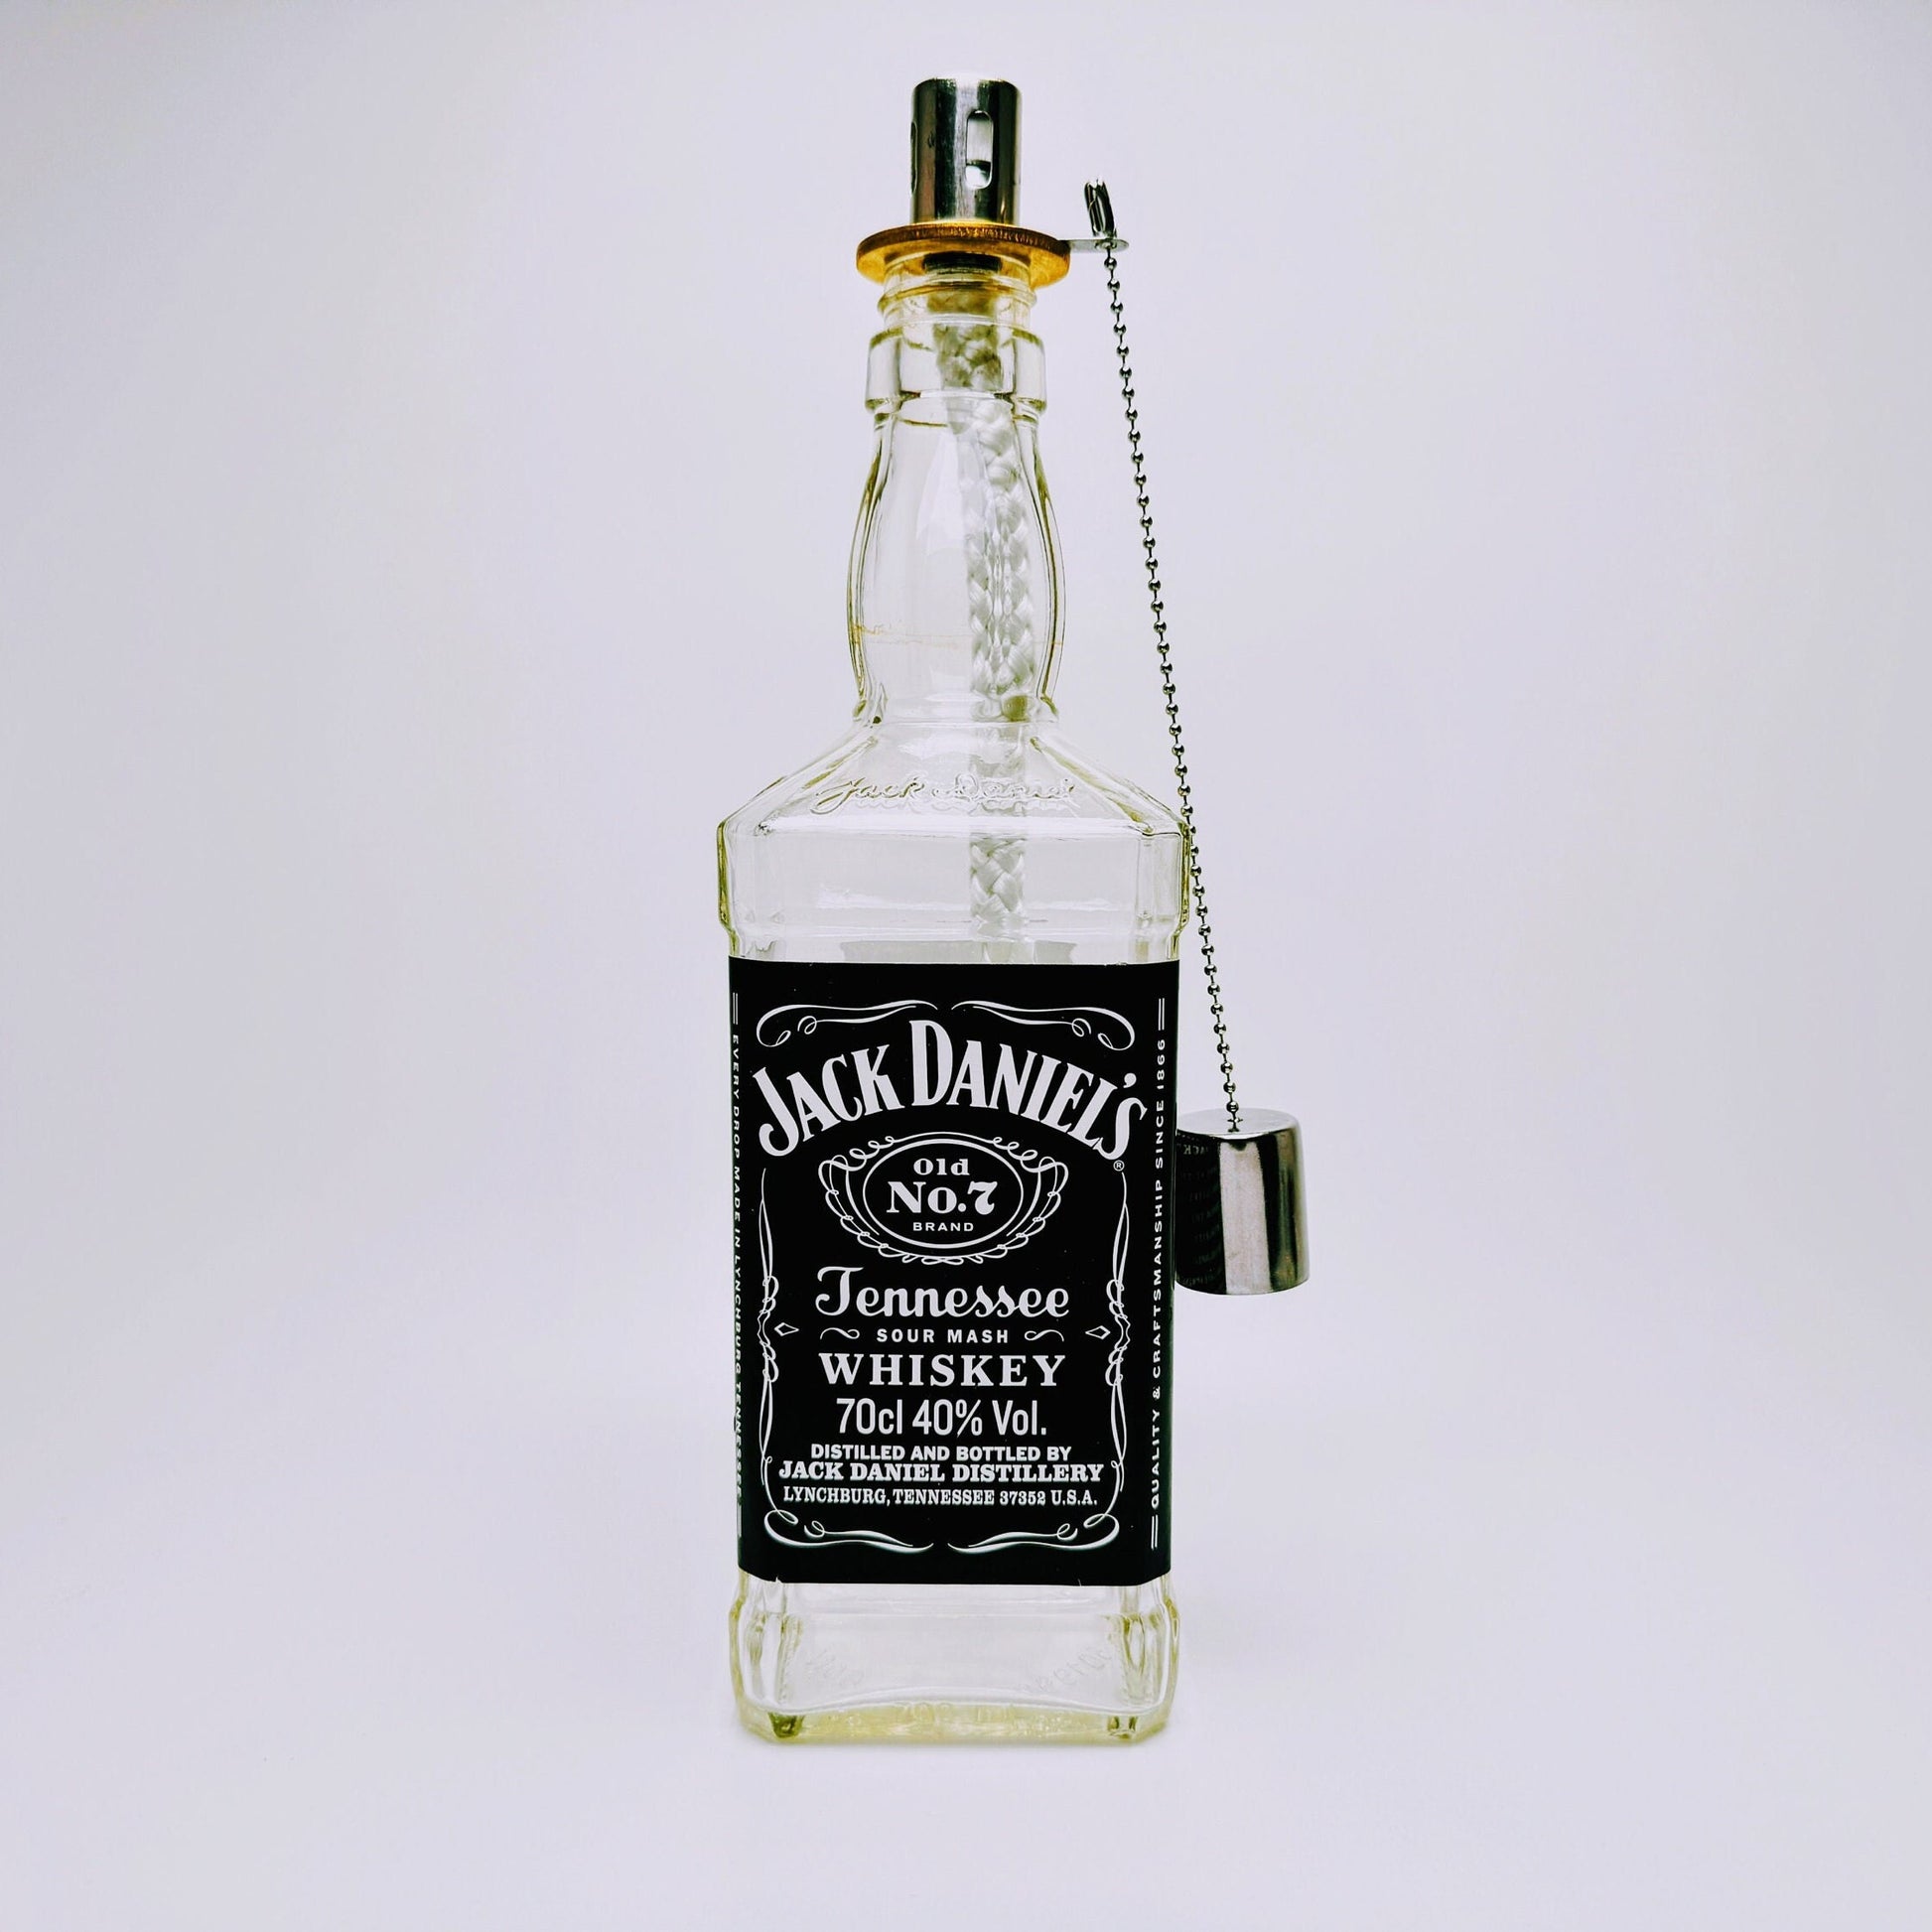 Whisky-Öllampe "Jack Daniels" | Handgemachte Öllampe aus Jack Daniels Single Barrel Flaschen | Upcycling | Individuell | Geschenk | Deko